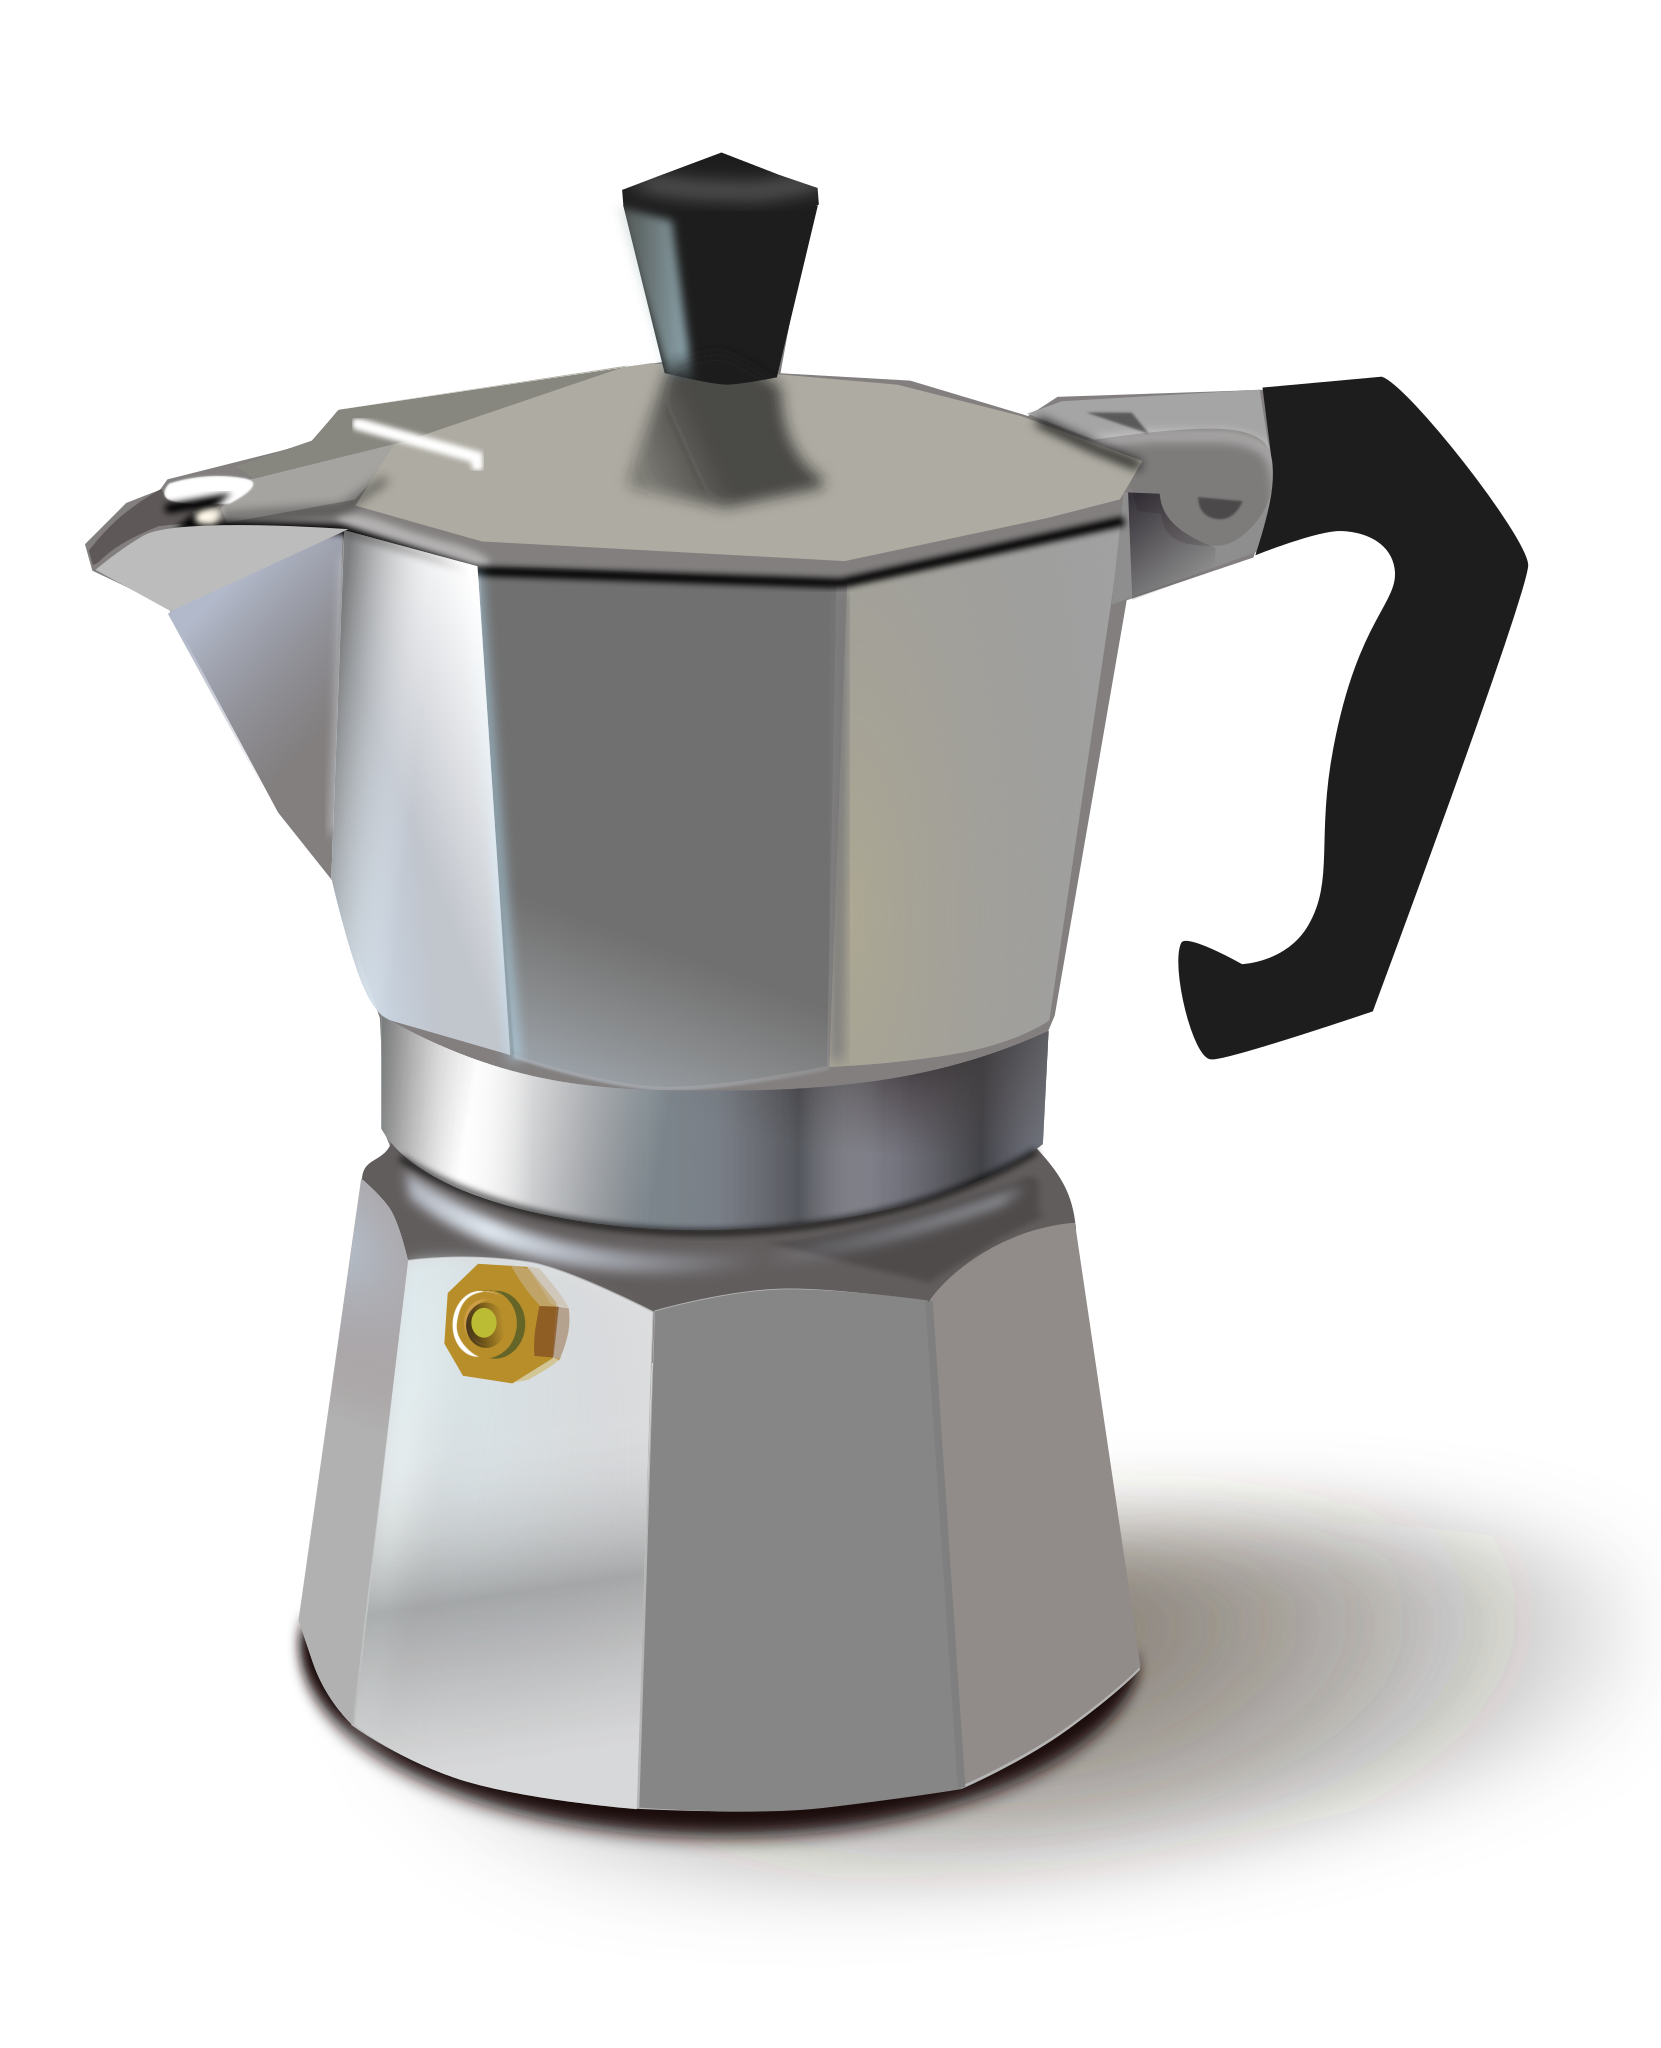 https://upload.wikimedia.org/wikipedia/commons/thumb/6/60/Italian-coffee-maker.svg/1661px-Italian-coffee-maker.svg.png